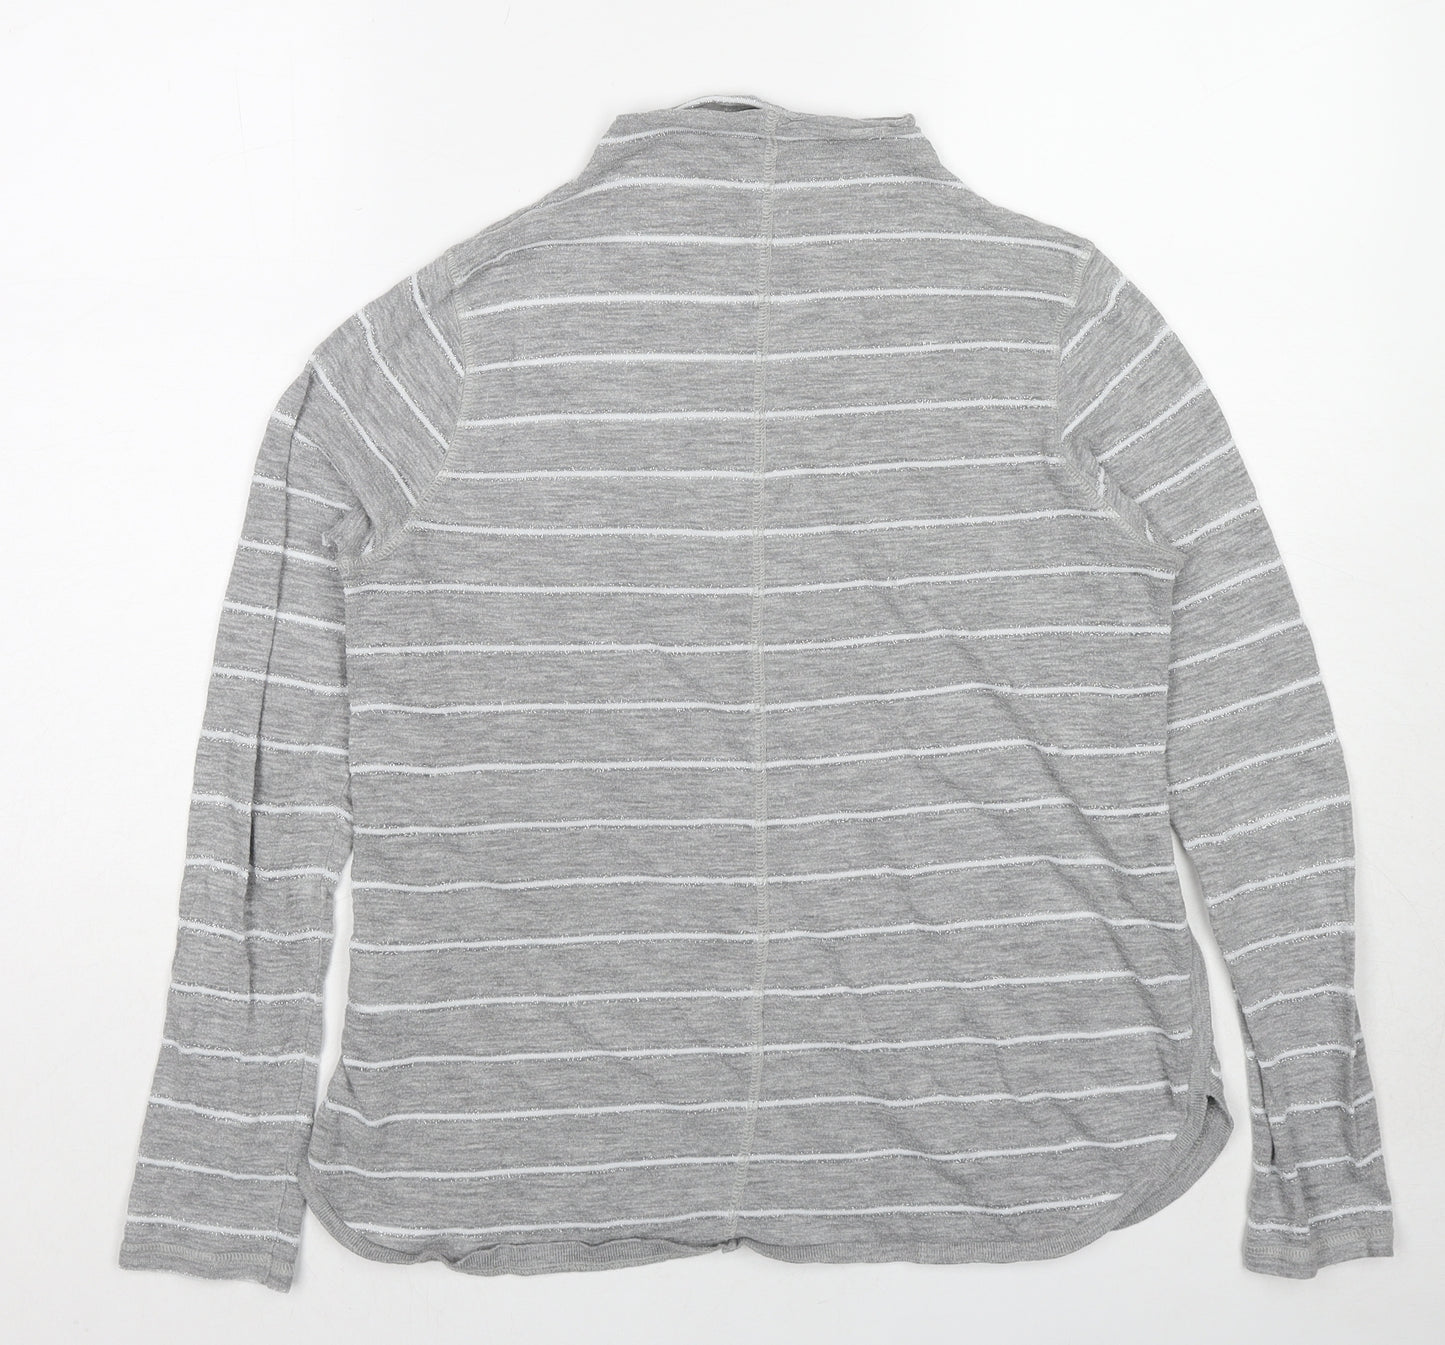 NEXT Womens Grey Striped Cotton Basic T-Shirt Size 14 Mock Neck